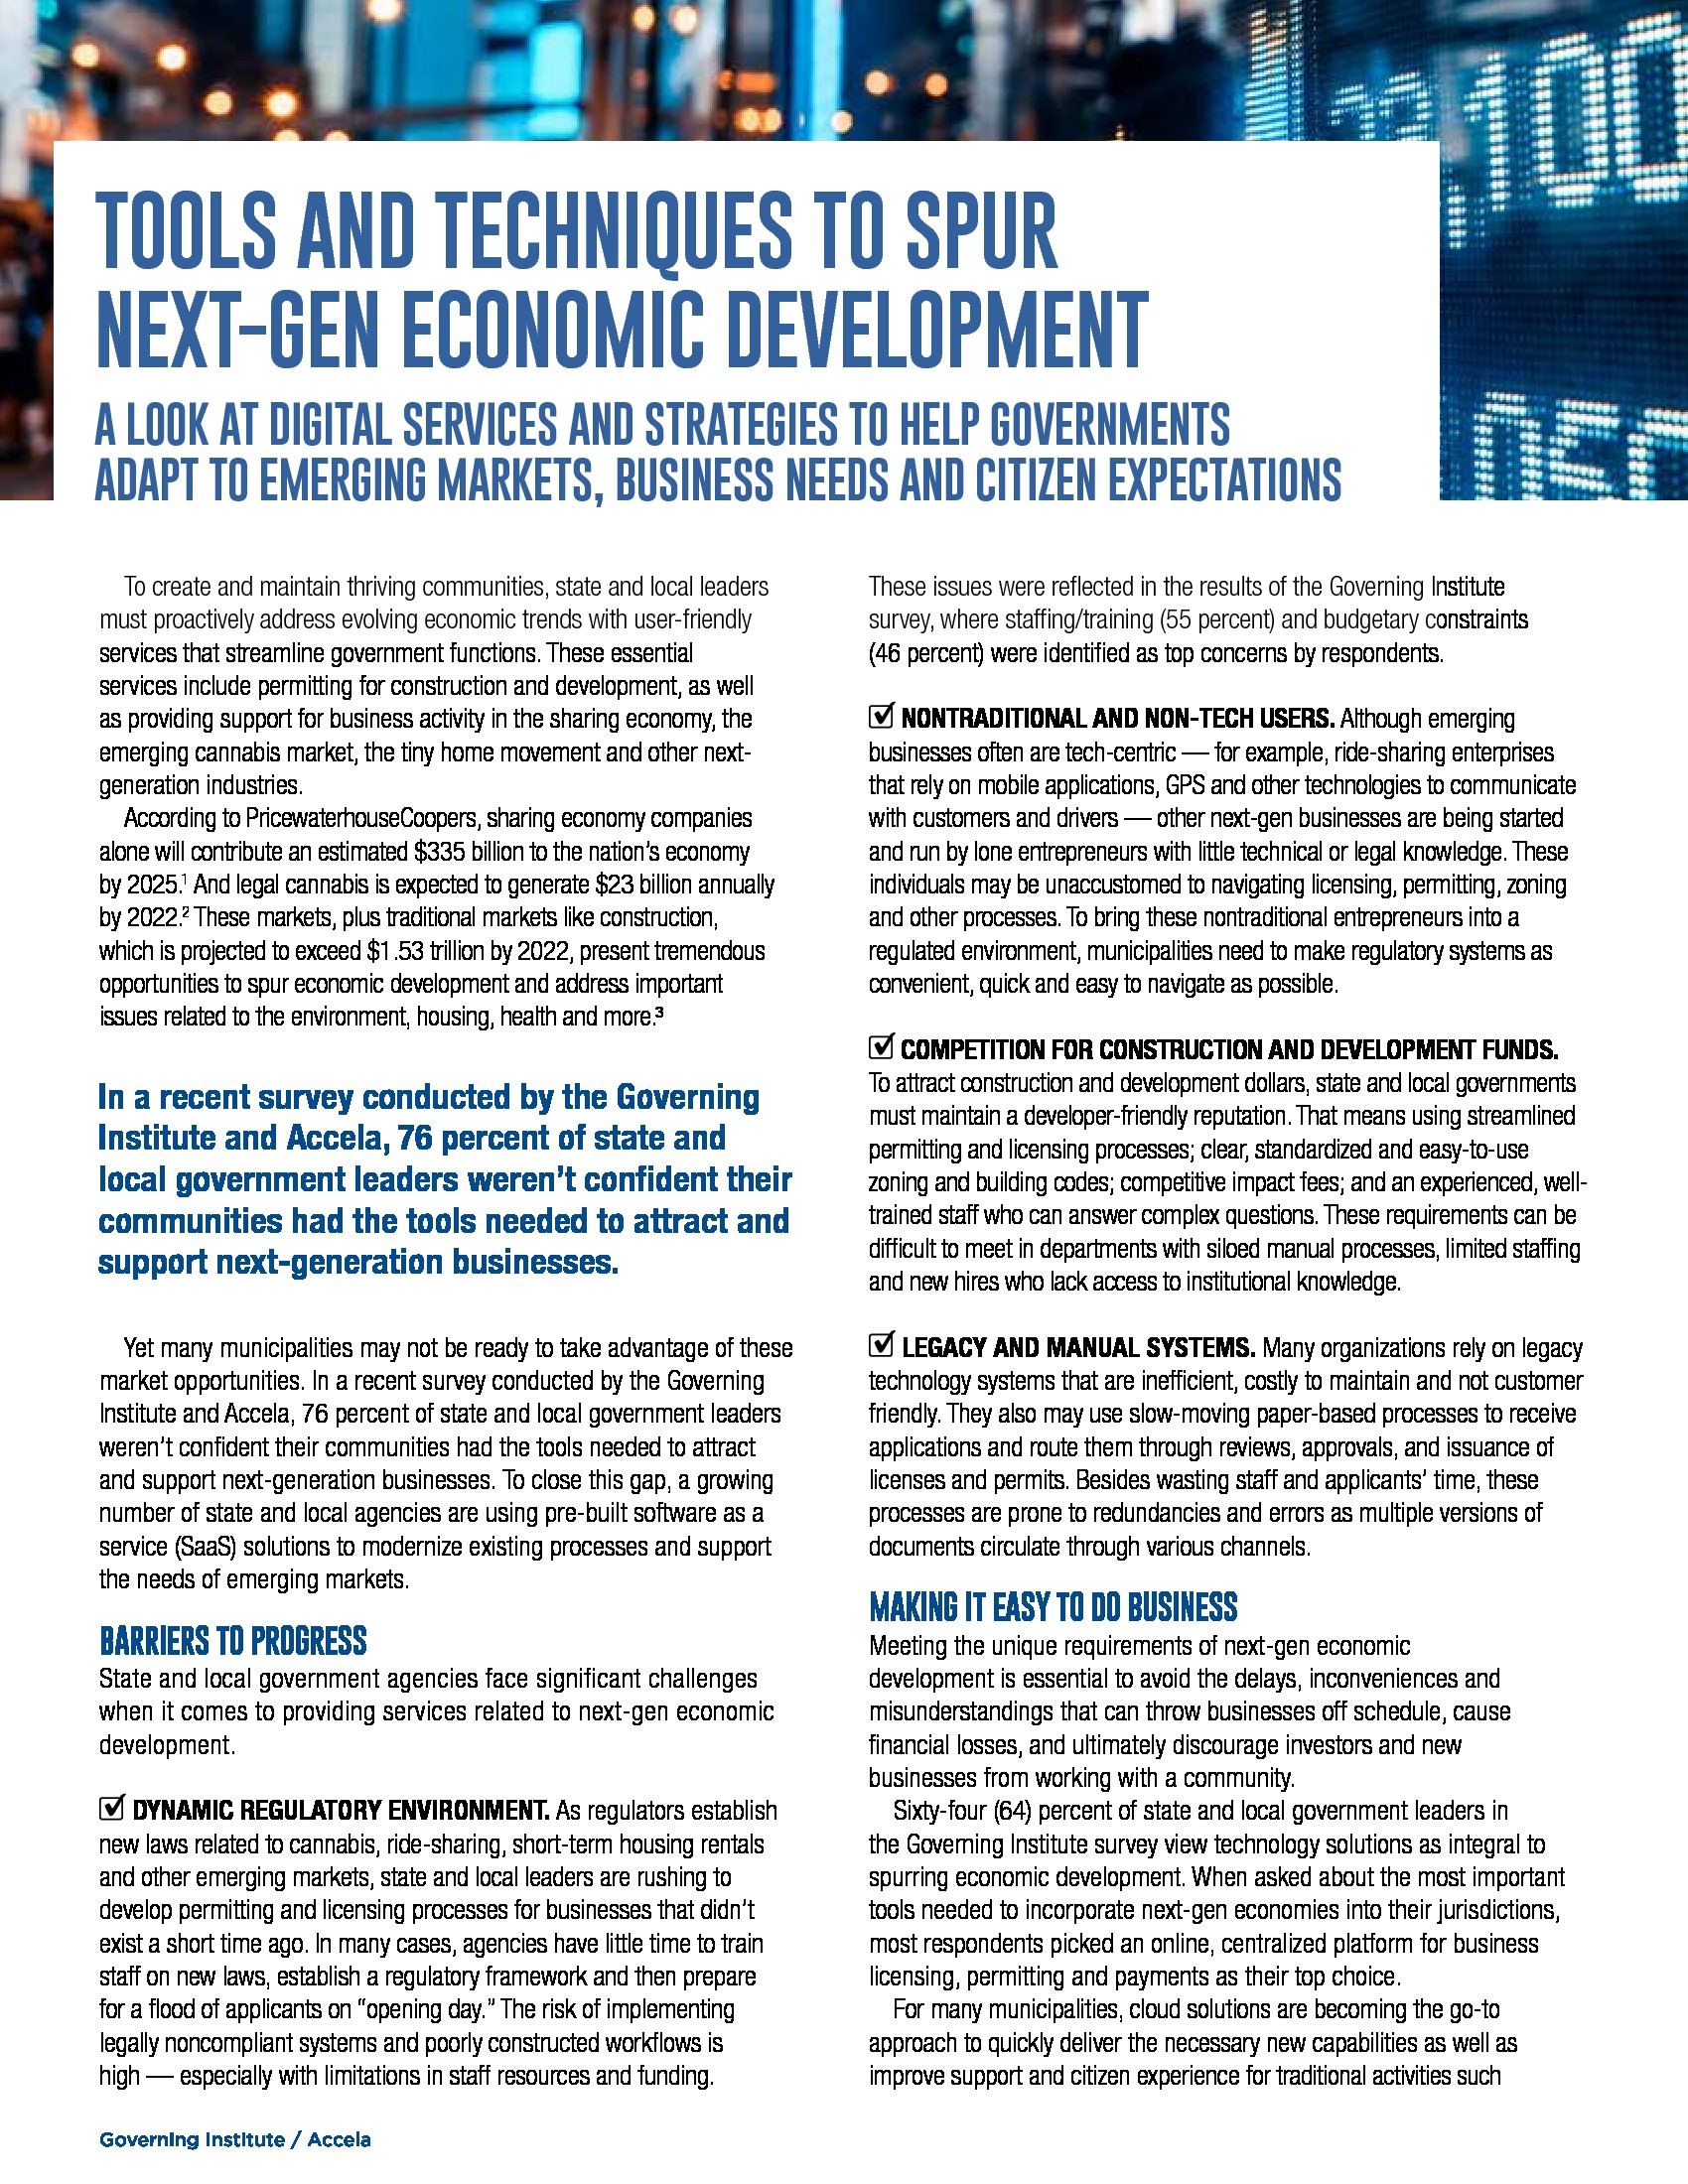 Tools and Techniques for Next-Gen Economic Development